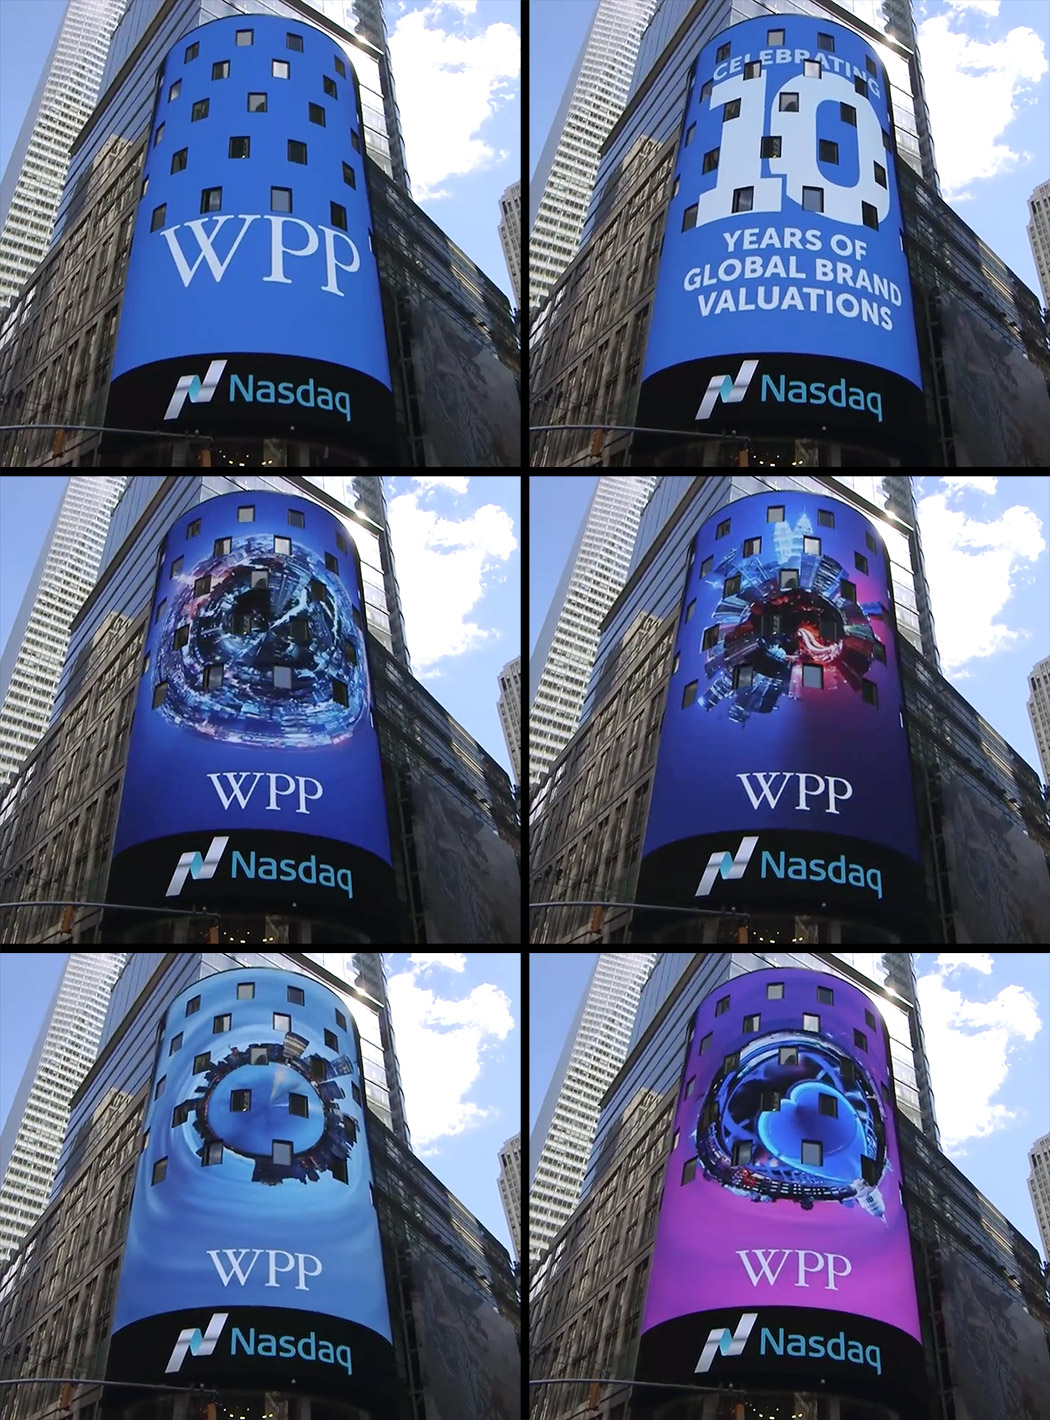 Close Up Big Screen Broadway WPP NASDAQ Times Square New York July 2015 Tiny Planets Brandz Top 100 10 Year Anniversary Celebration Paul Reiffer Sir Martin Sorrell CEO Stock Market